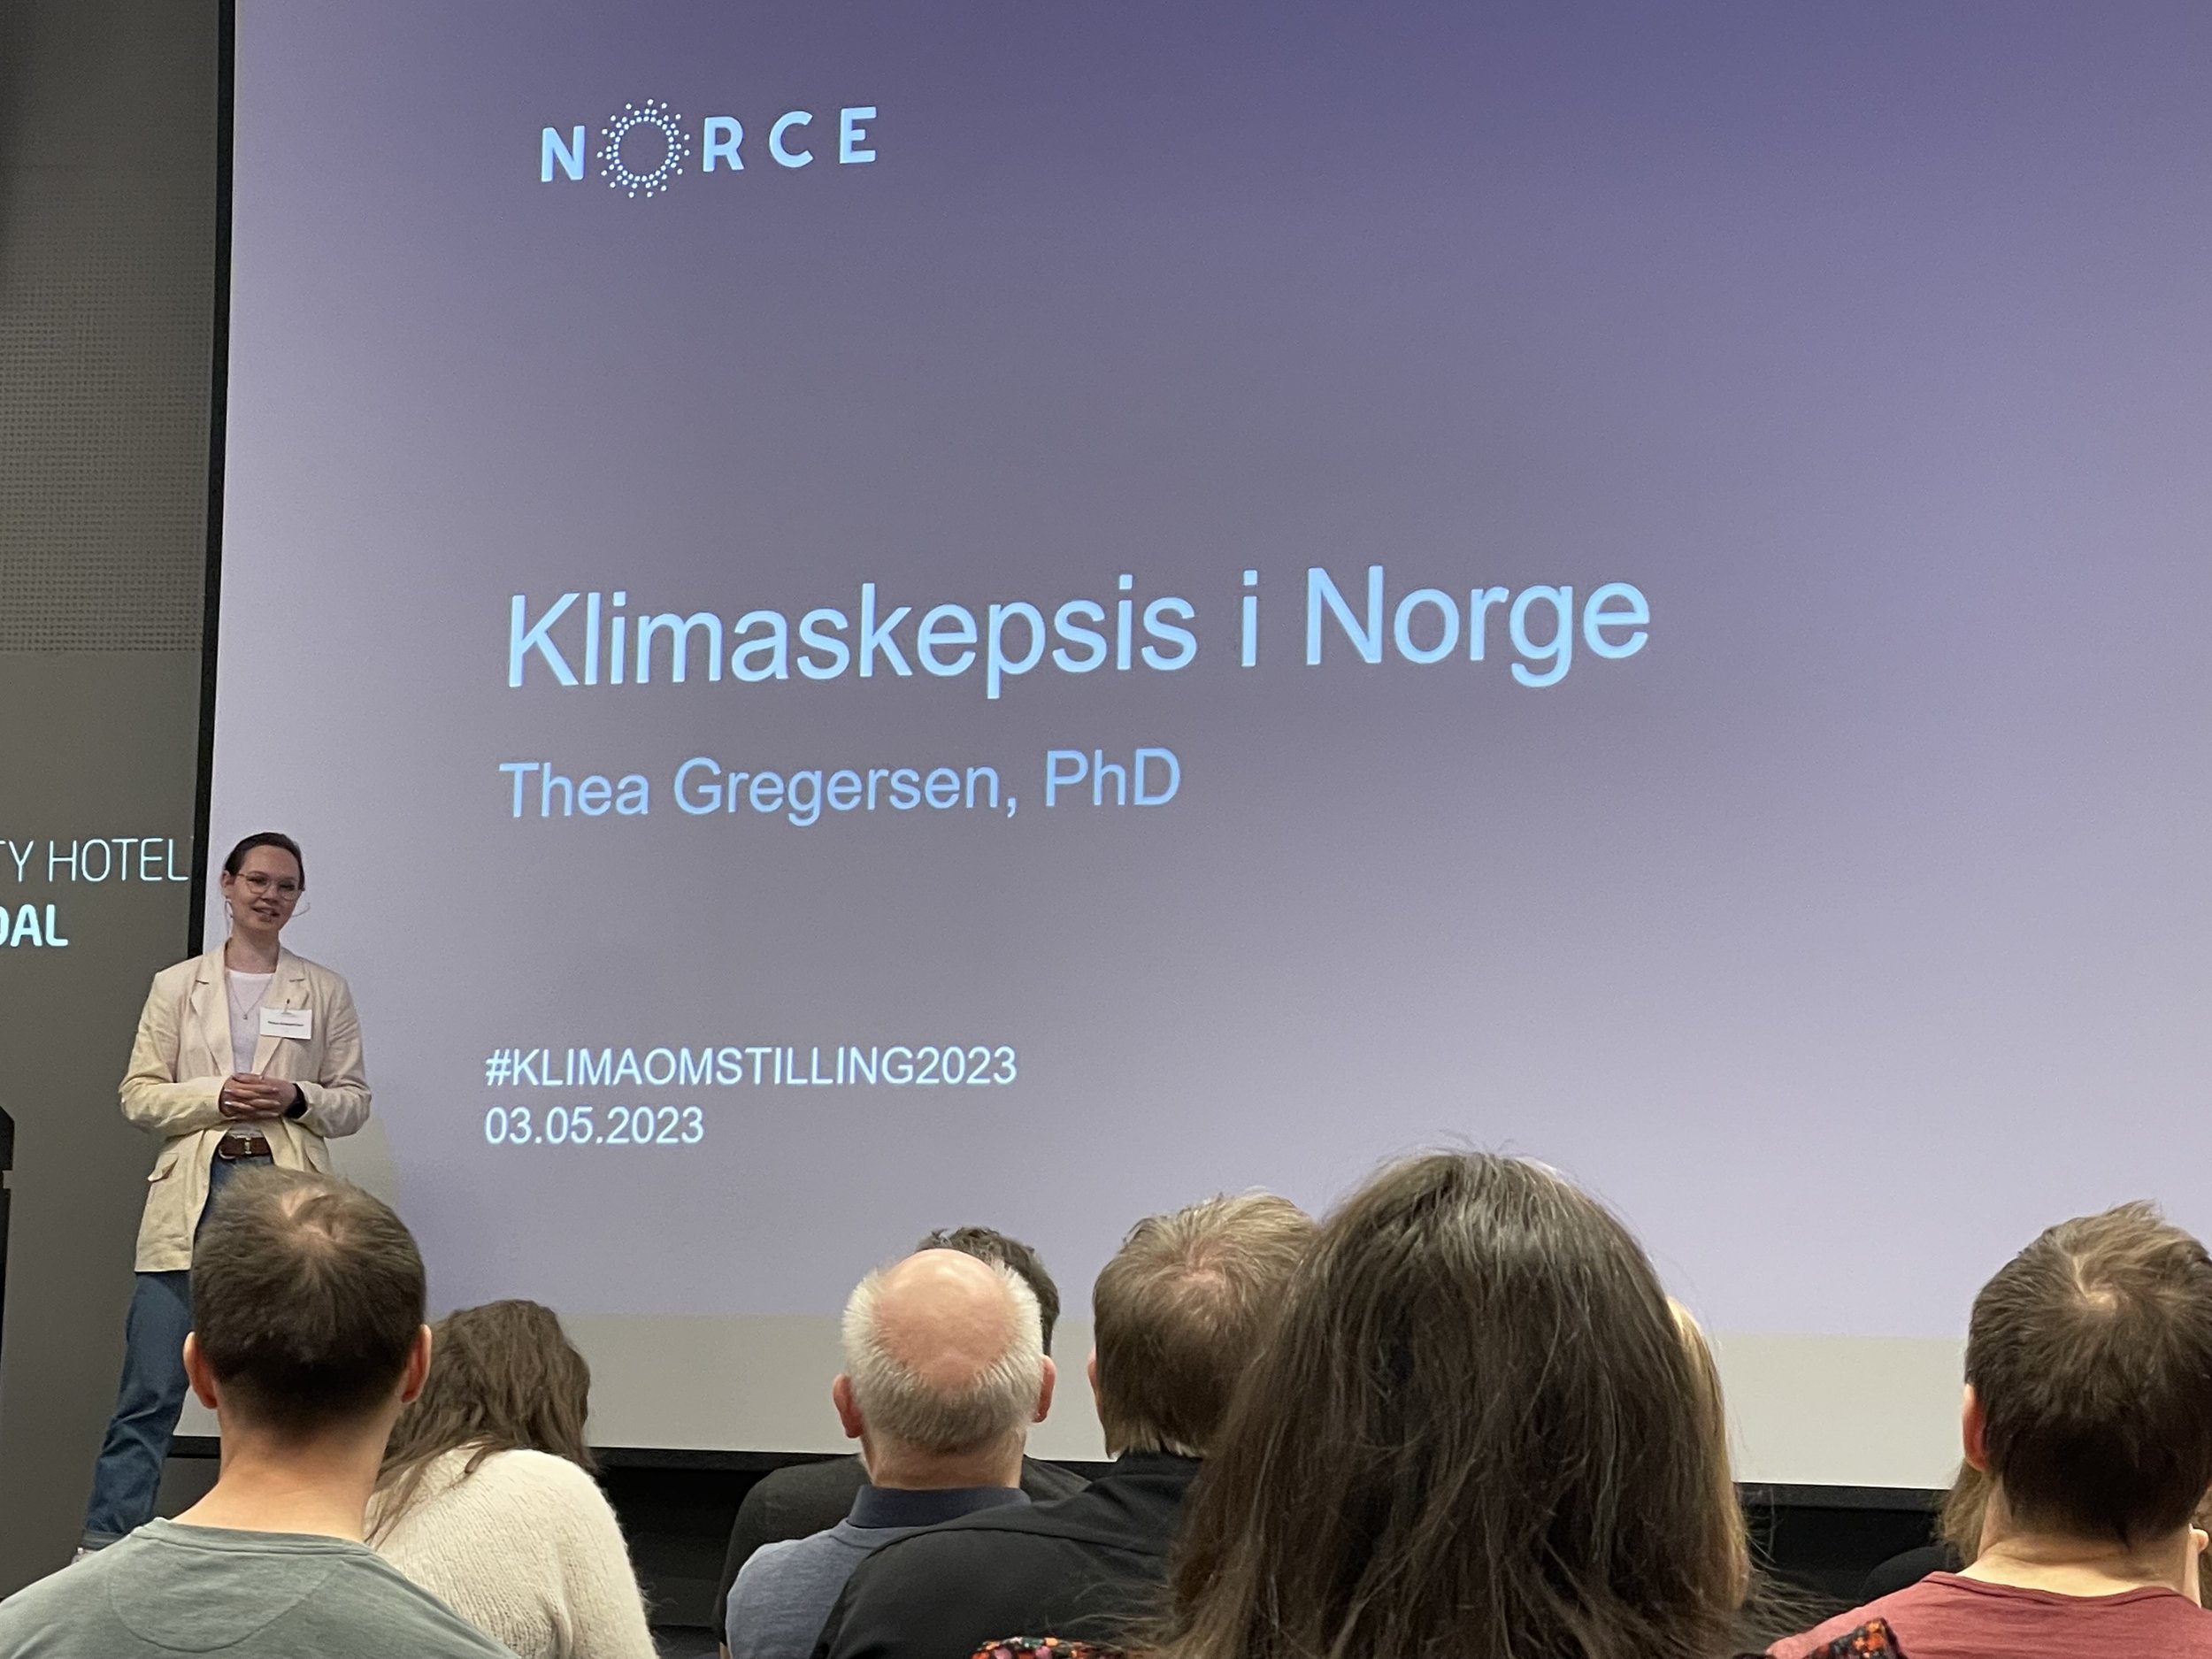  Thea Gregersen ved Norce snakka om ulike måtar klimaskepsis kan arte seg på (foto: Idun A. Husabø) 